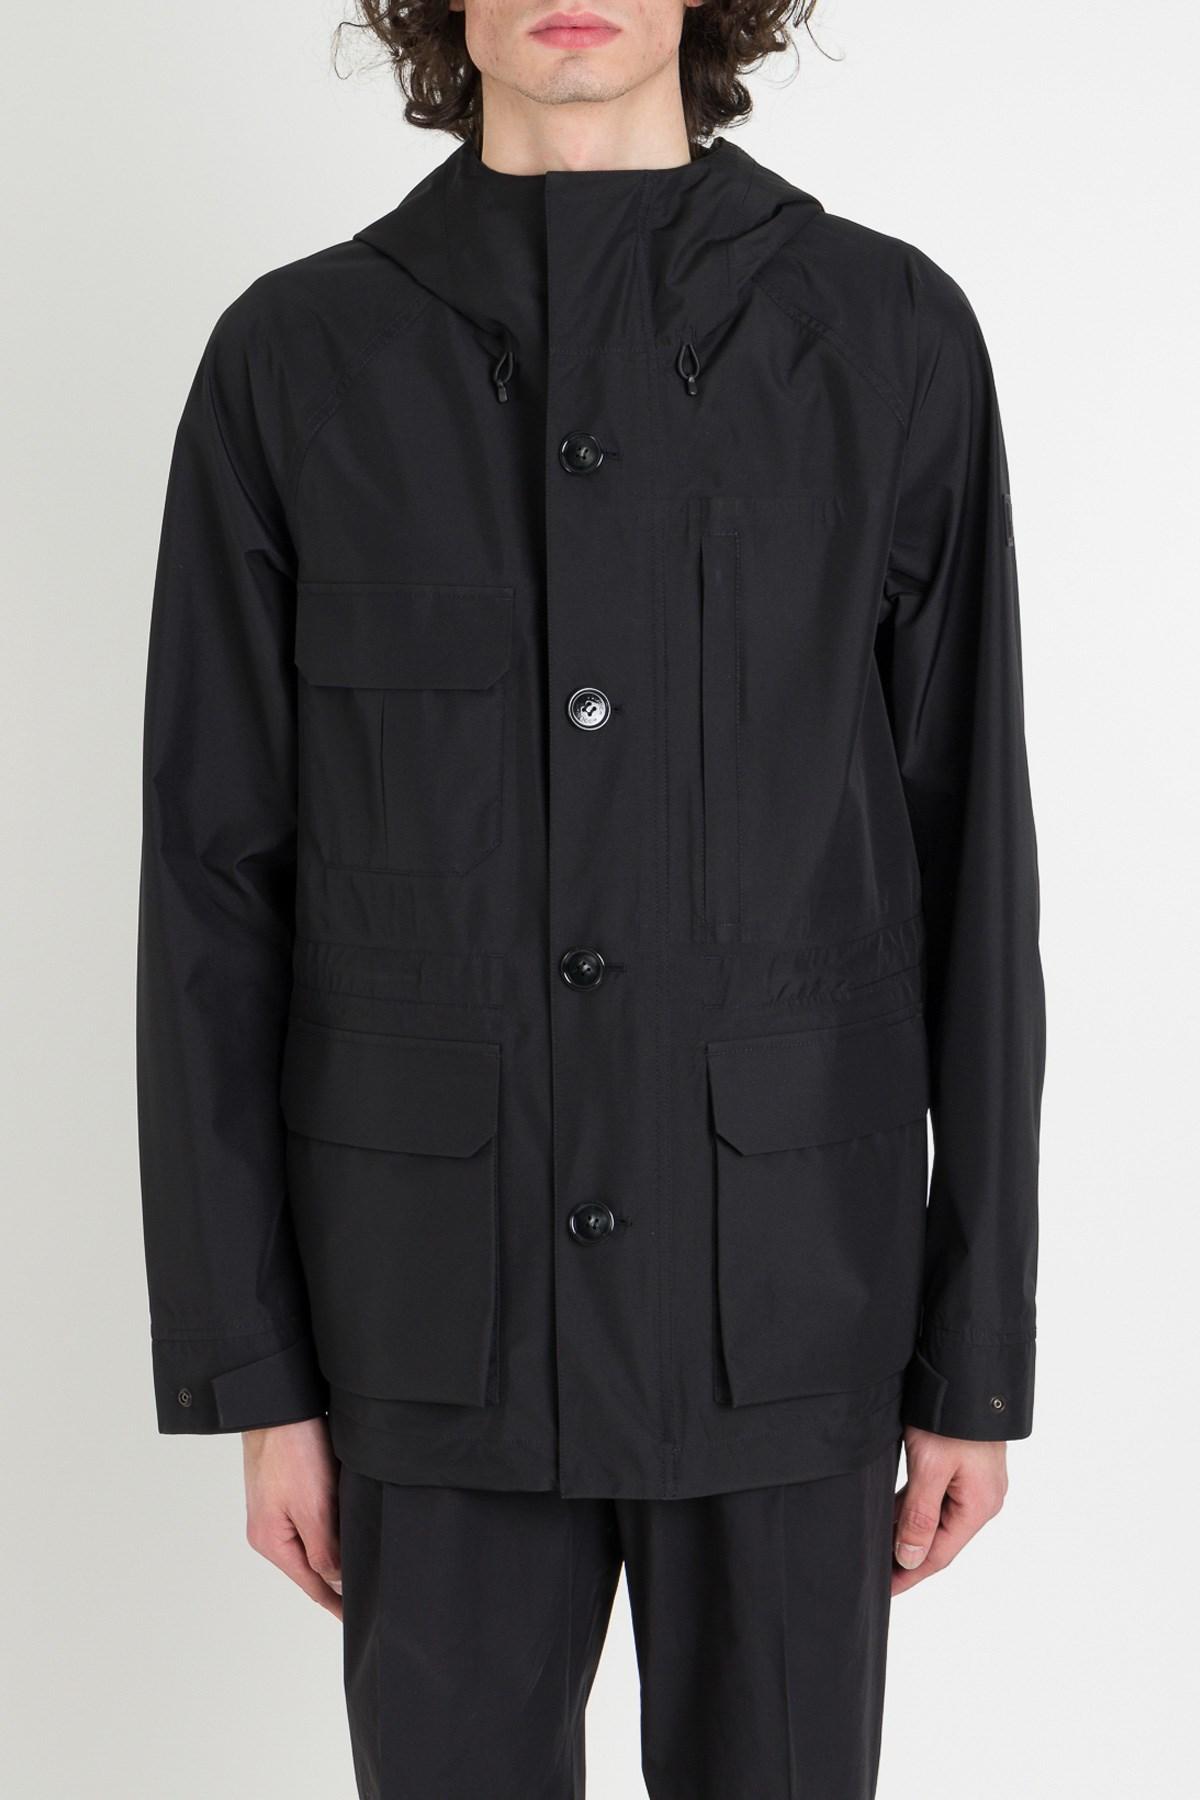 Woolrich Synthetic Mountain Jacket in Black for Men - Lyst